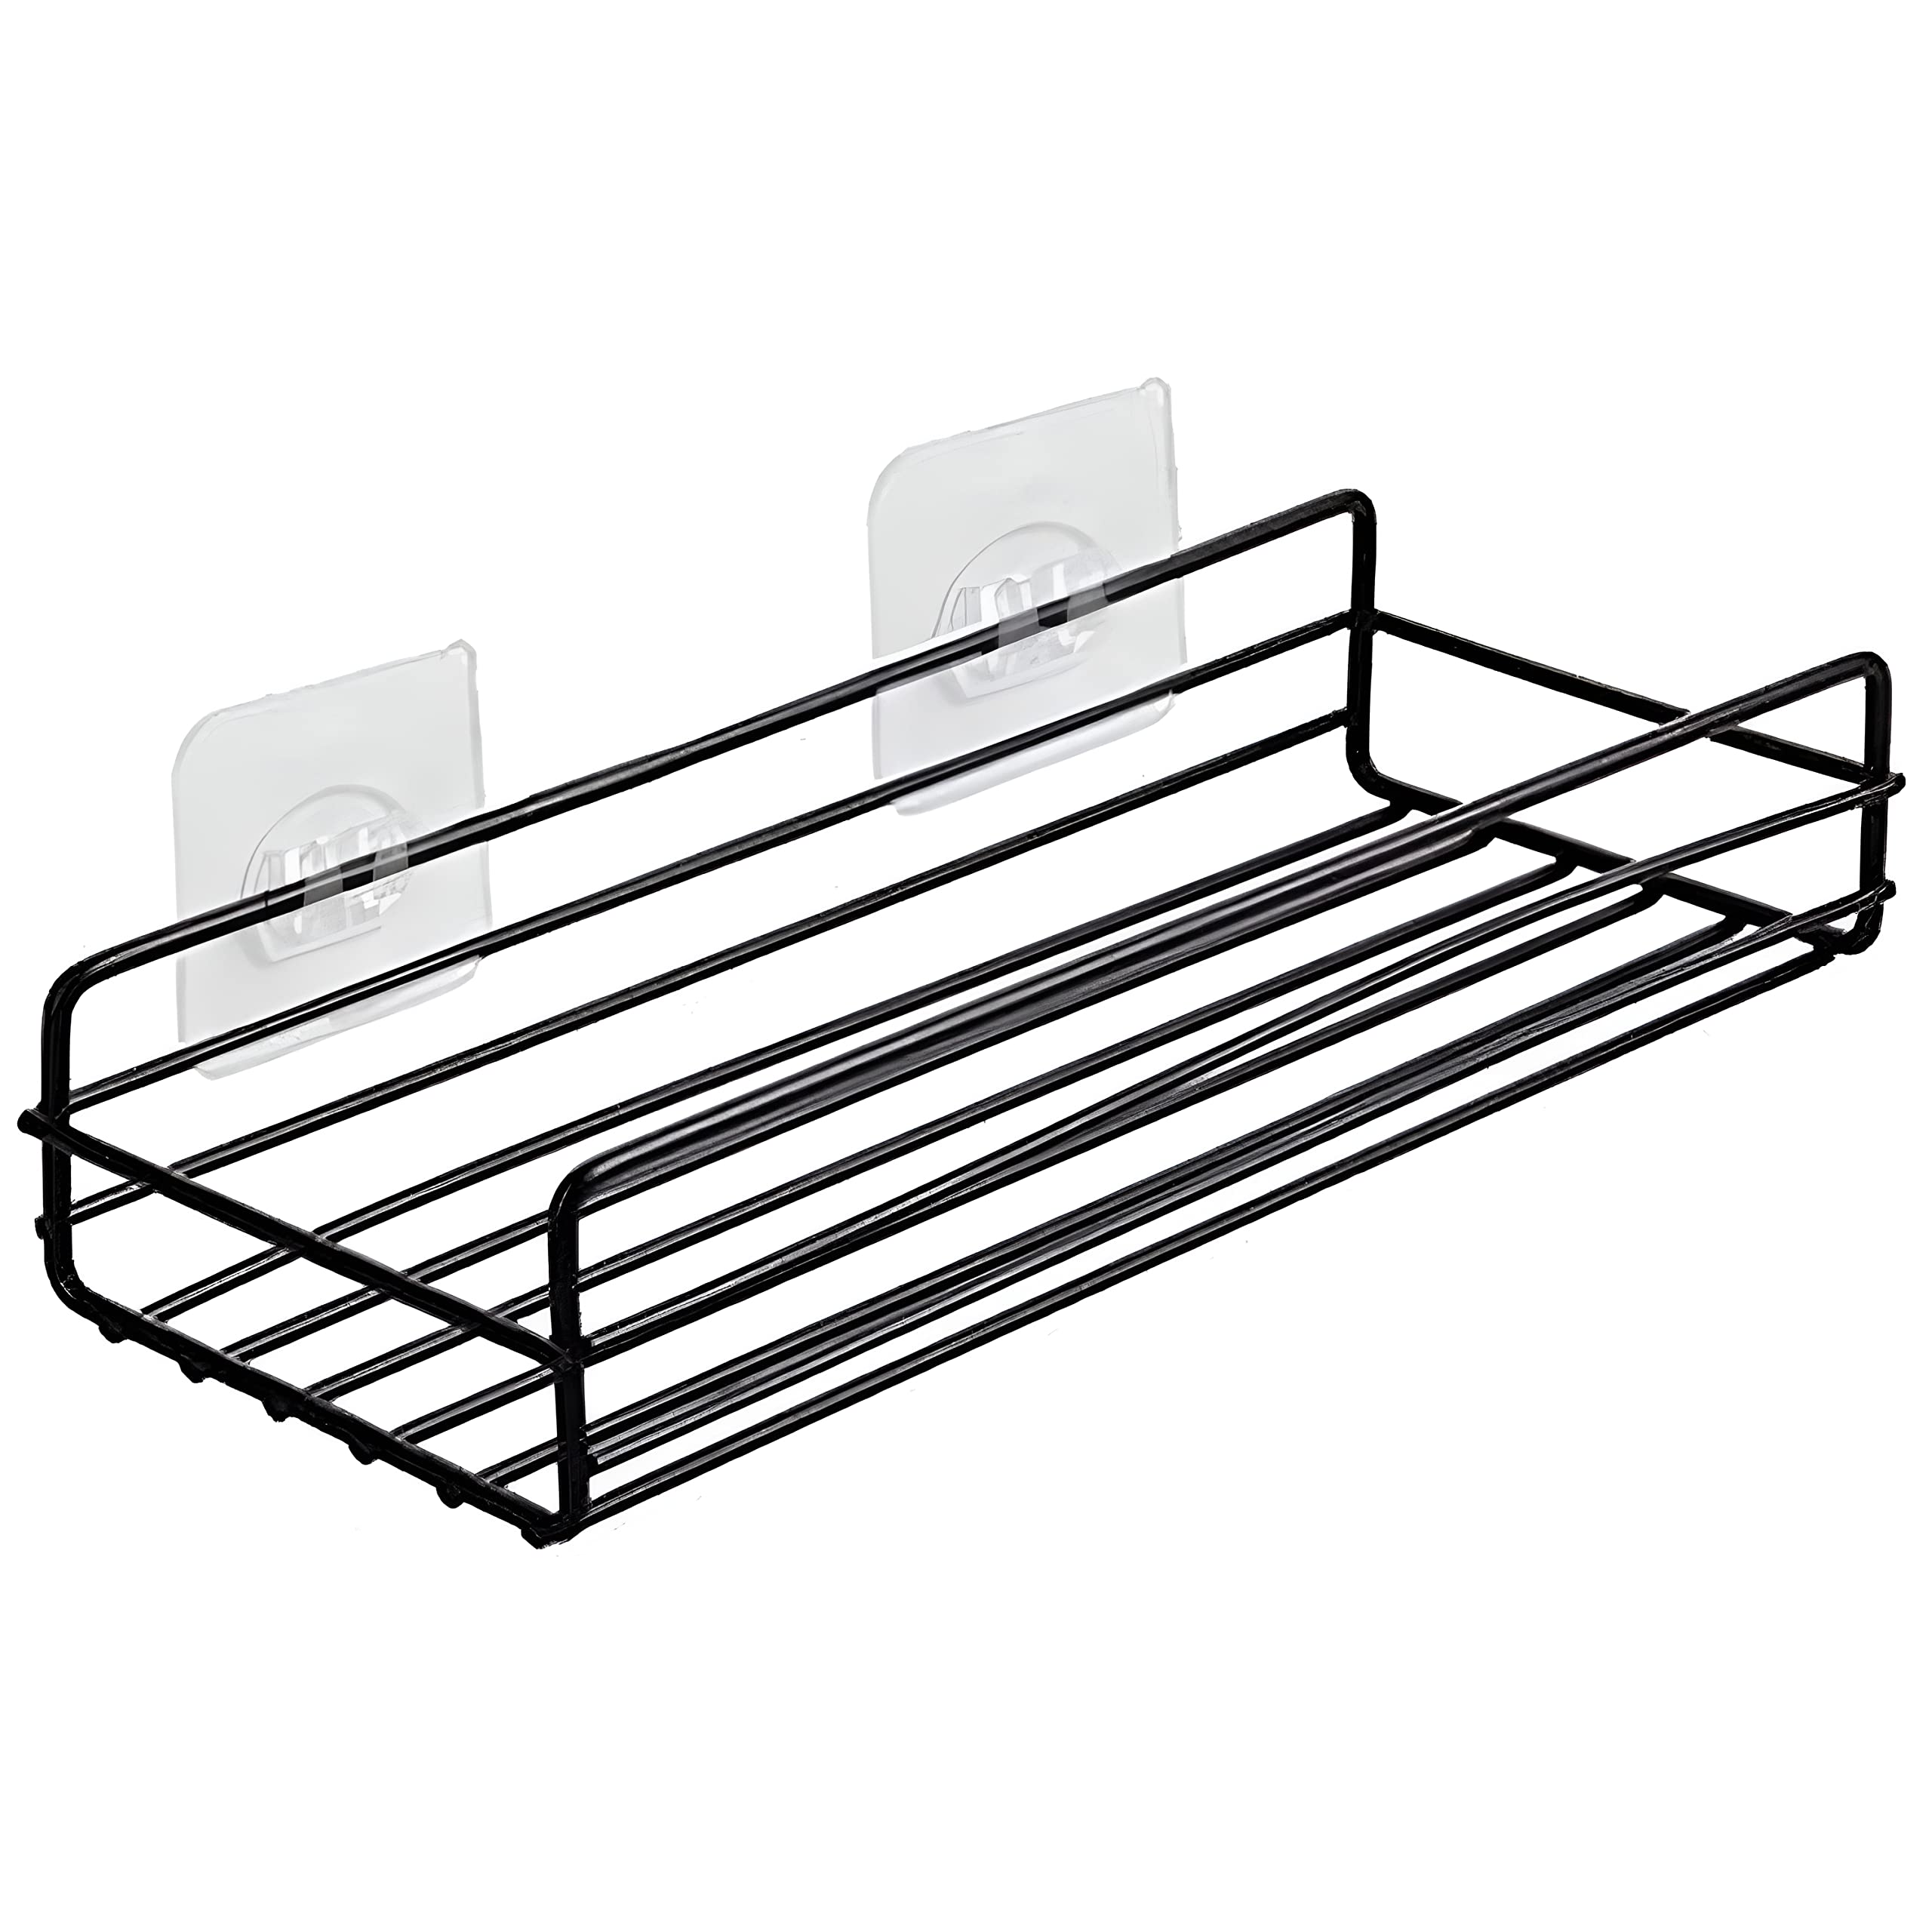 Plantex Self-Adhesive GI-Steel Bathroom Shelf-Multipurpose Rack/Organizer for Bathroom & Kitchen/Bathroom Accessories - Pack of 2 (12x5 inches,Black)